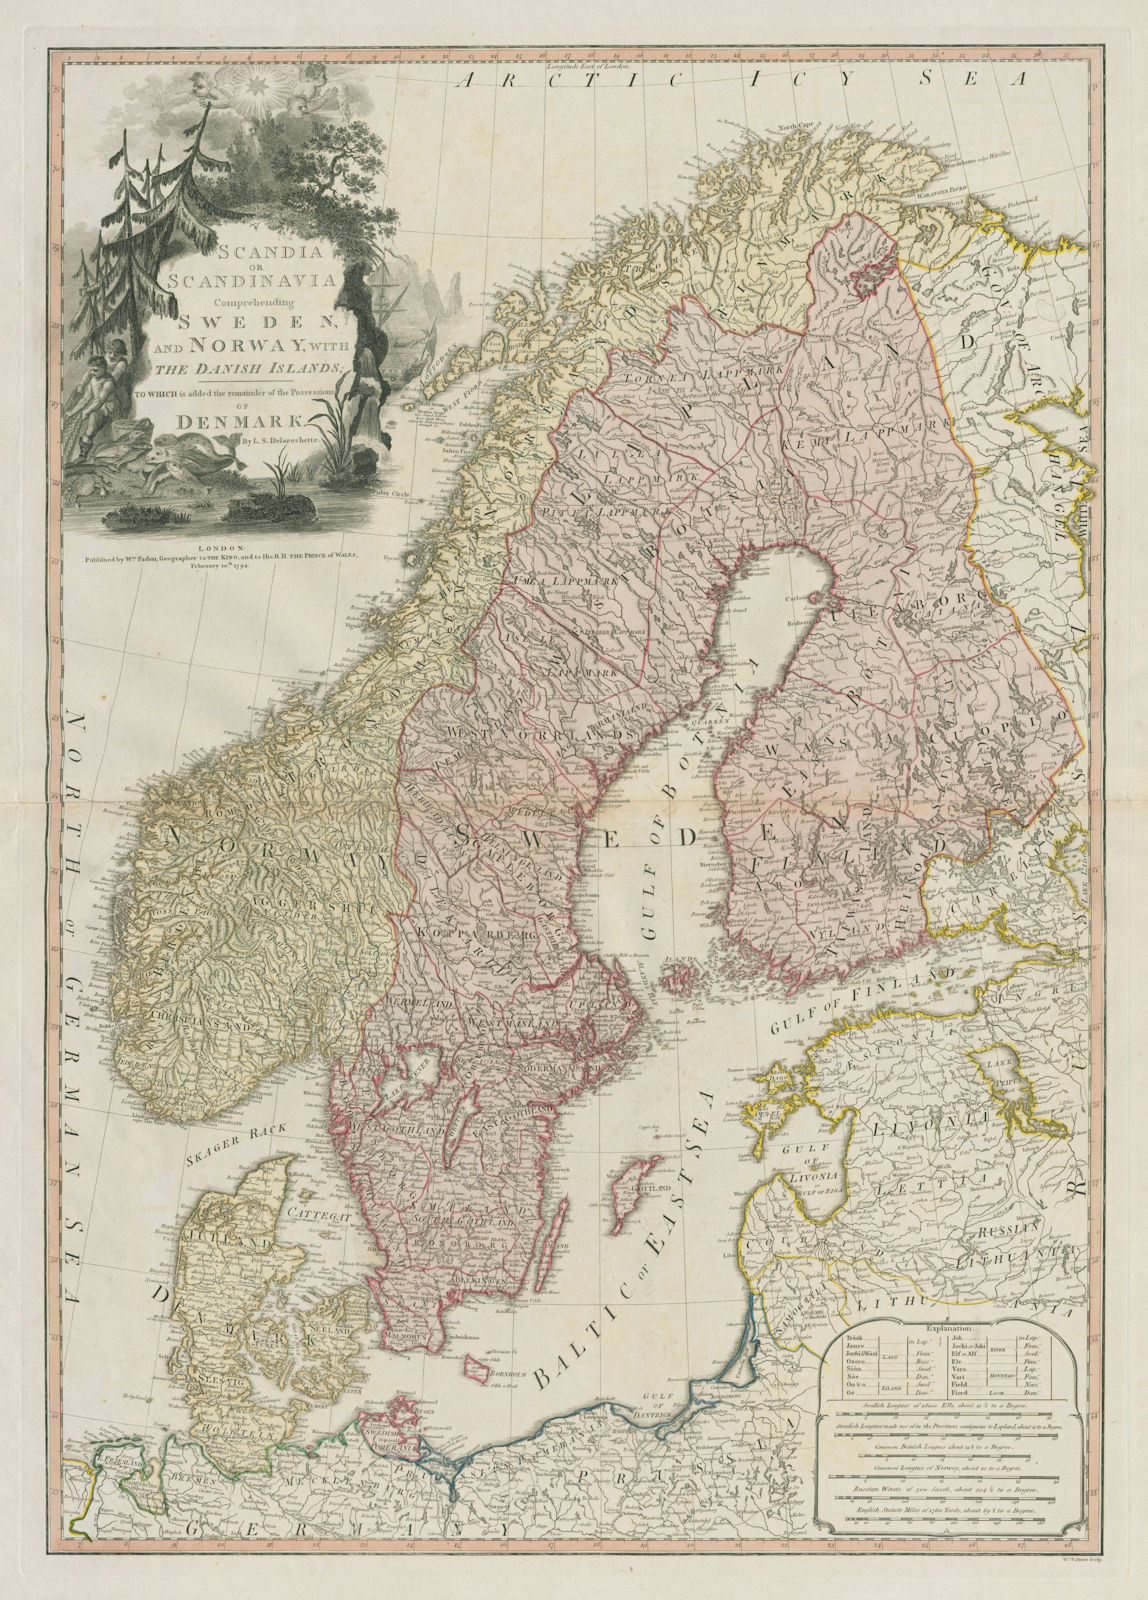 Scandia or Scandinavia comprehending Sweden & Norway DELAROCHETTE/FADEN 1794 map